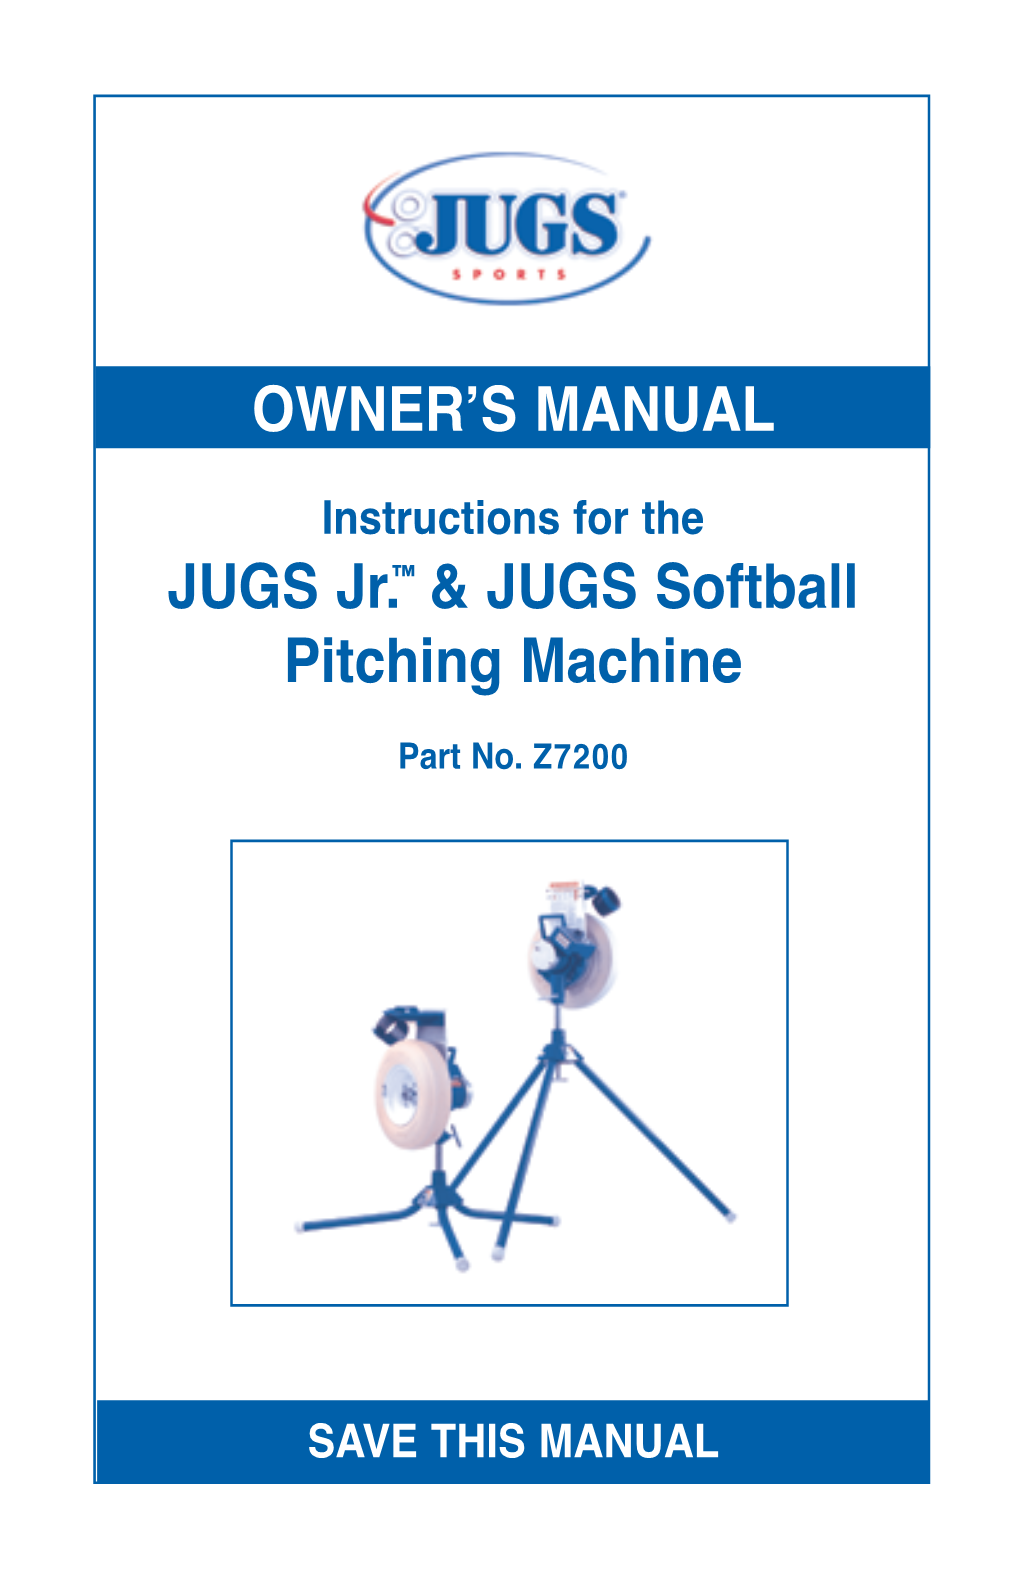 OWNER's MANUAL JUGS Jr.™ & JUGS Softball Pitching Machine